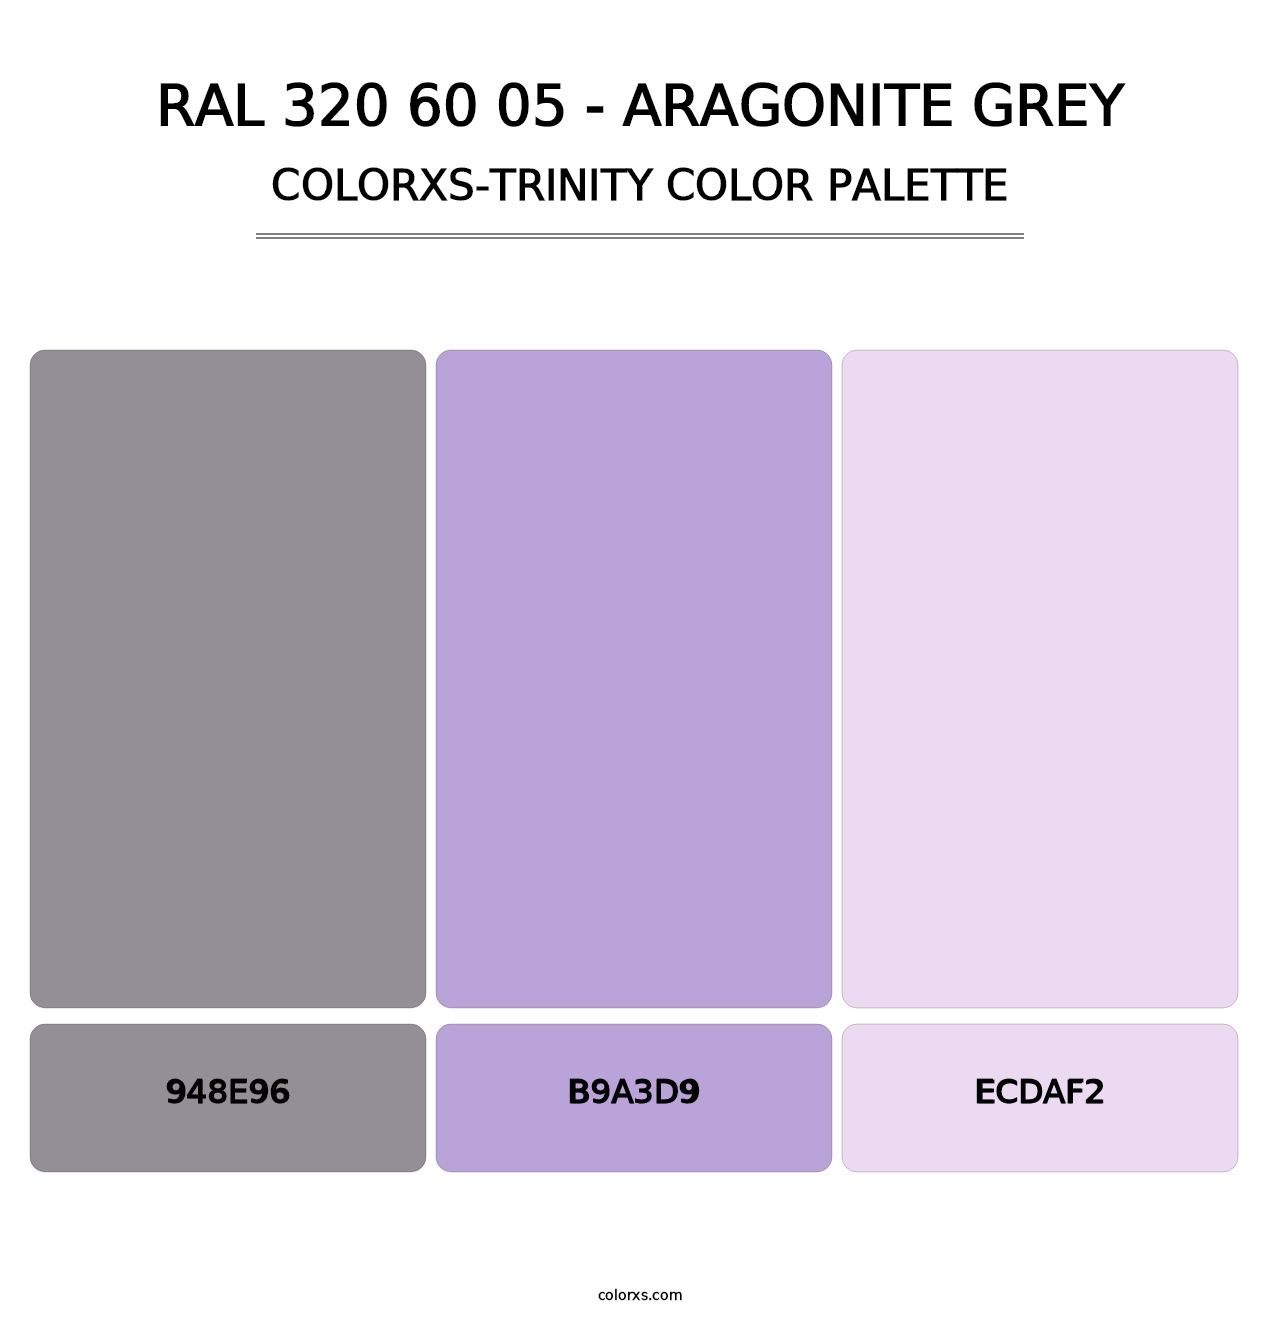 RAL 320 60 05 - Aragonite Grey - Colorxs Trinity Palette